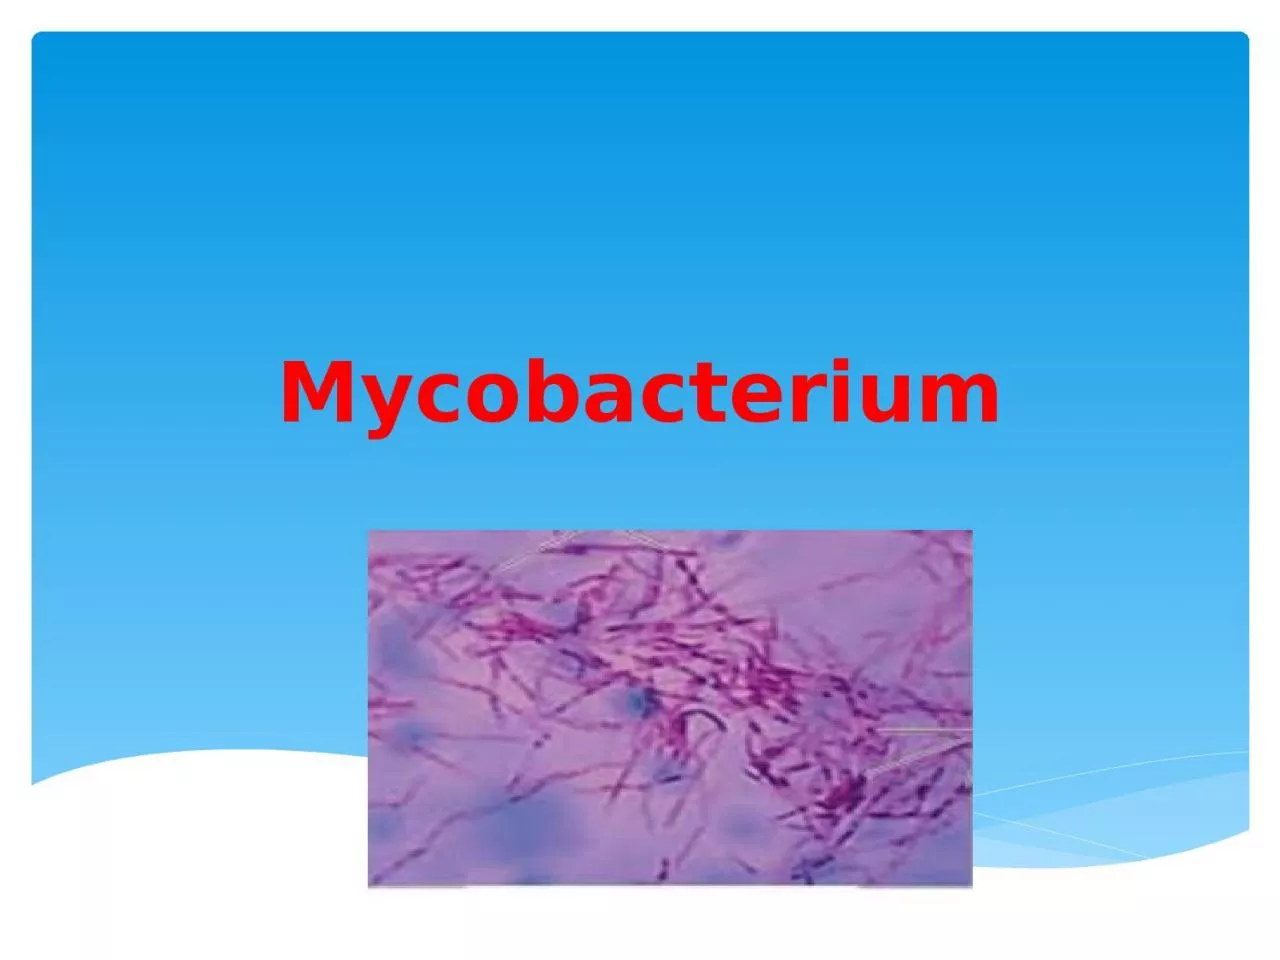 Mycobacterium Order:  Actinomycetails